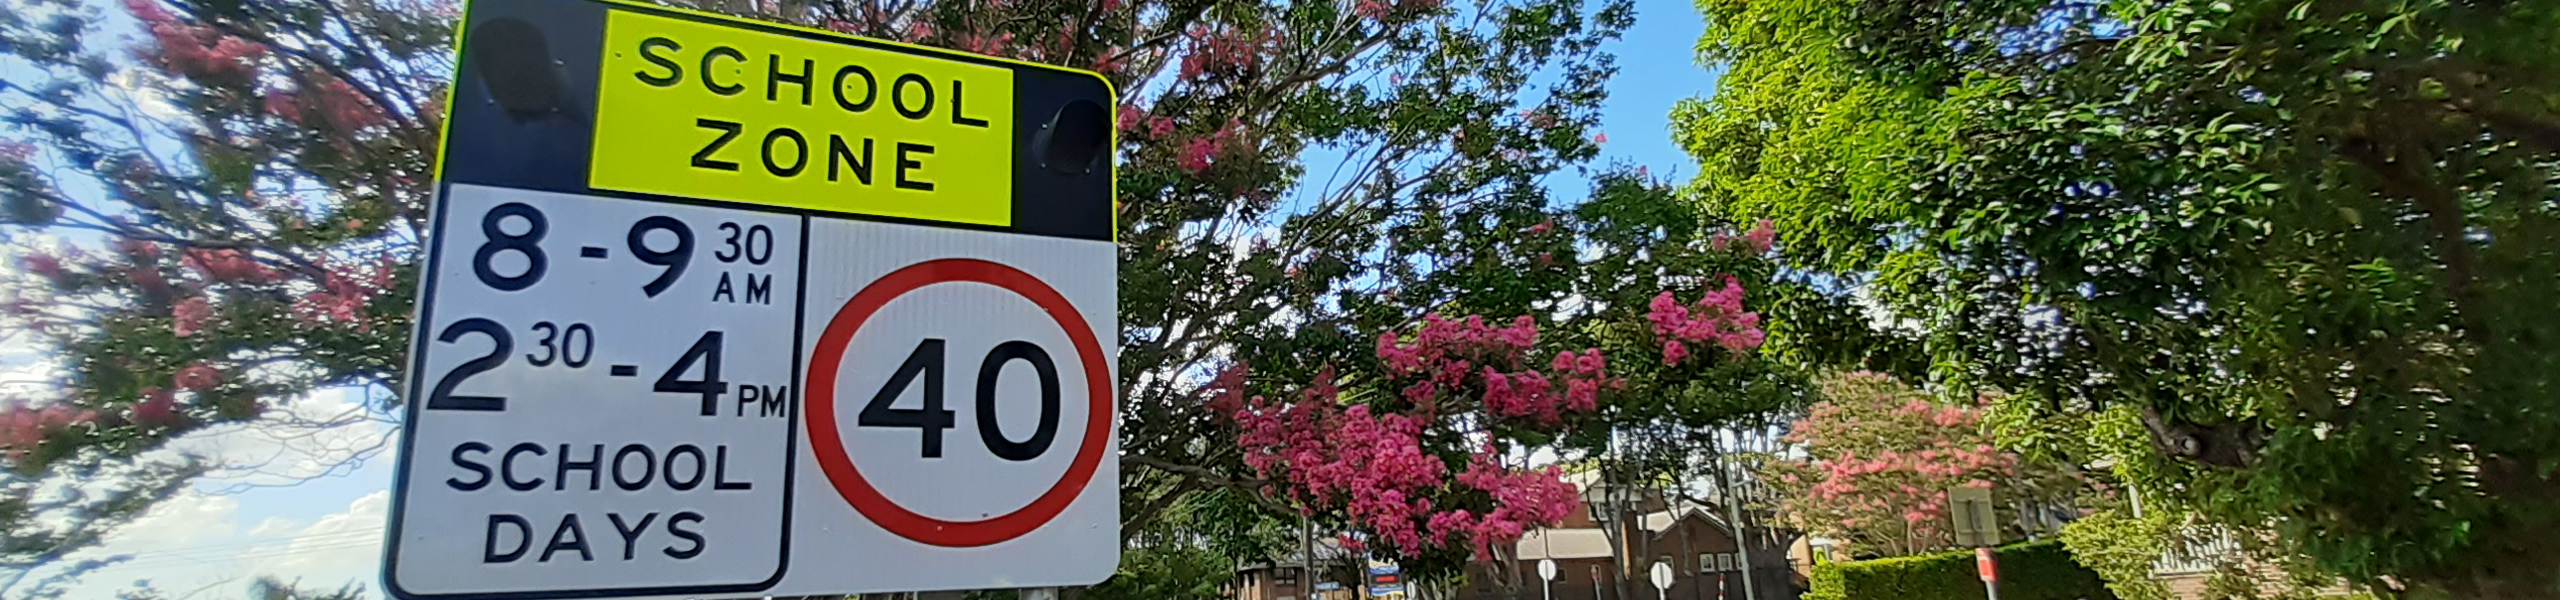 School Zone sign in Haberfield, Sydney, NSW